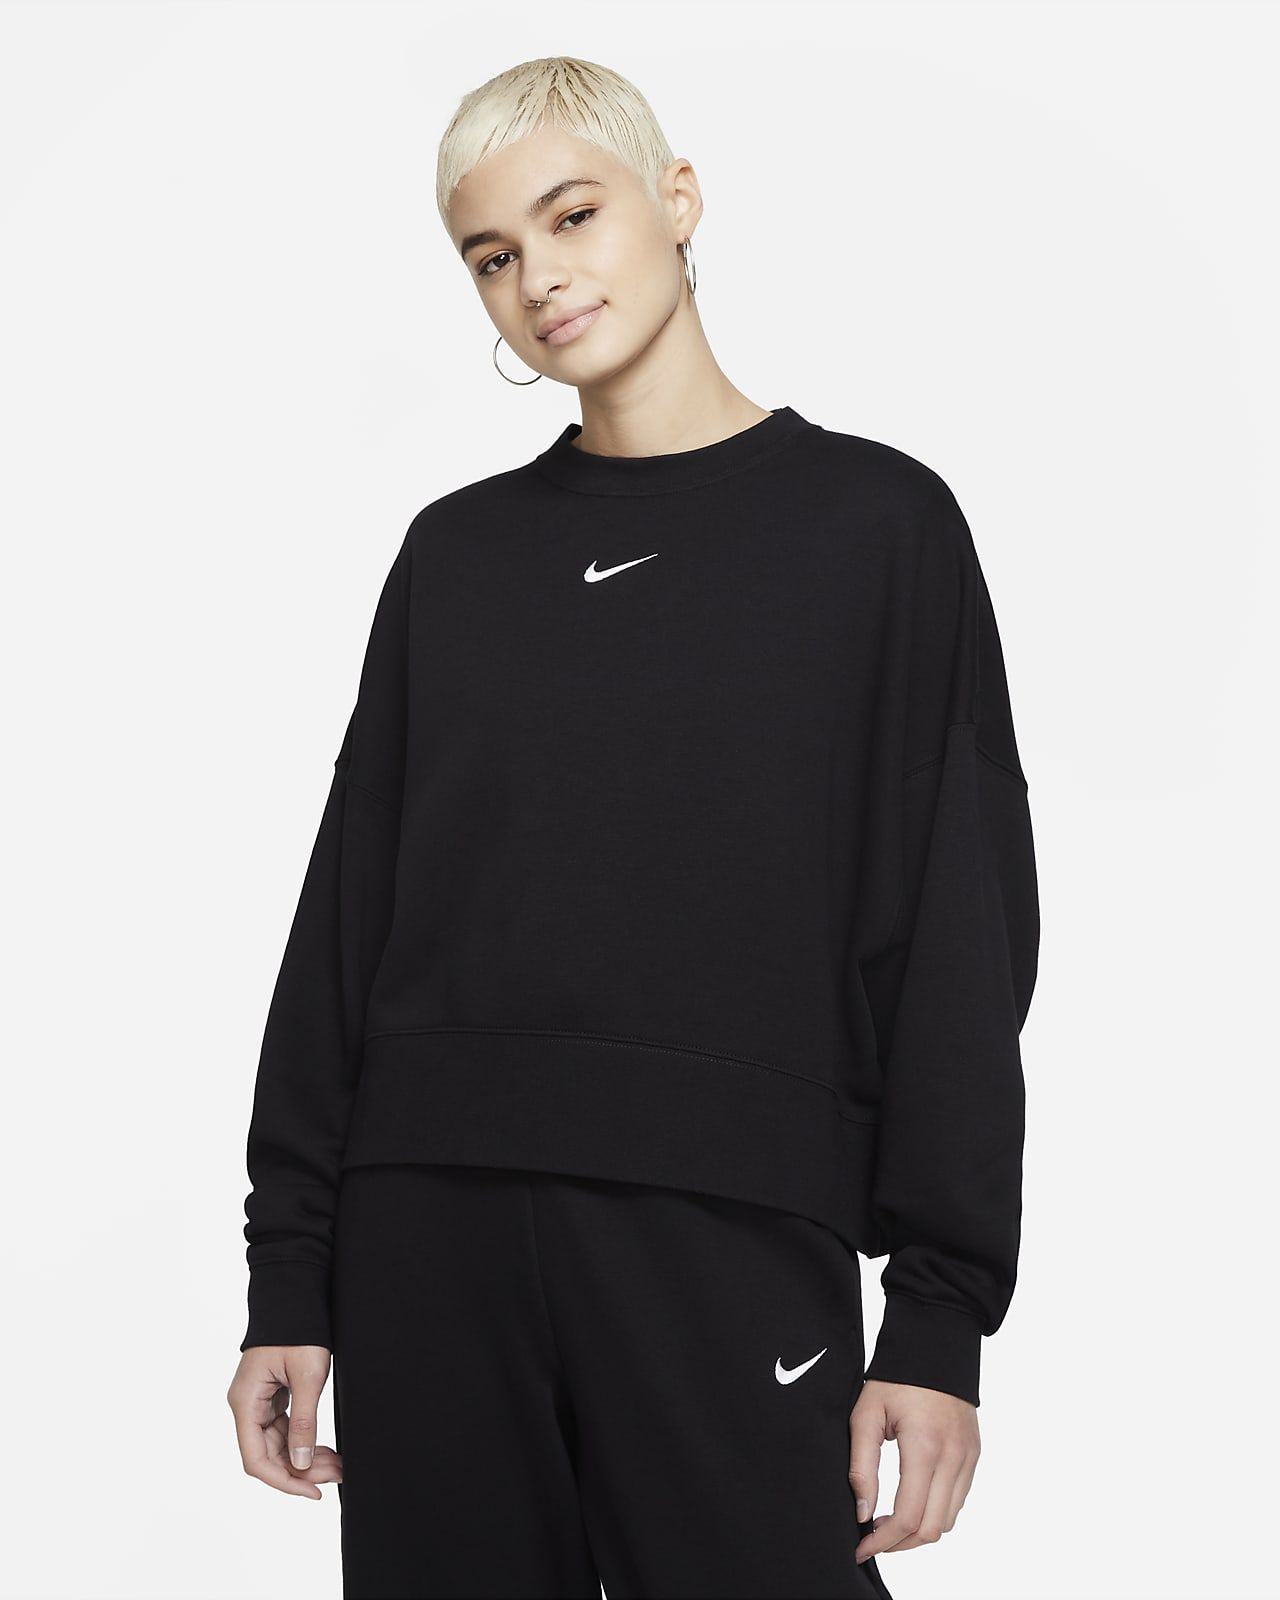 Nike Sportswear Collection Essentials Women's Oversized Fleece Crew Sweatshirt. Nike.com | Nike (US)